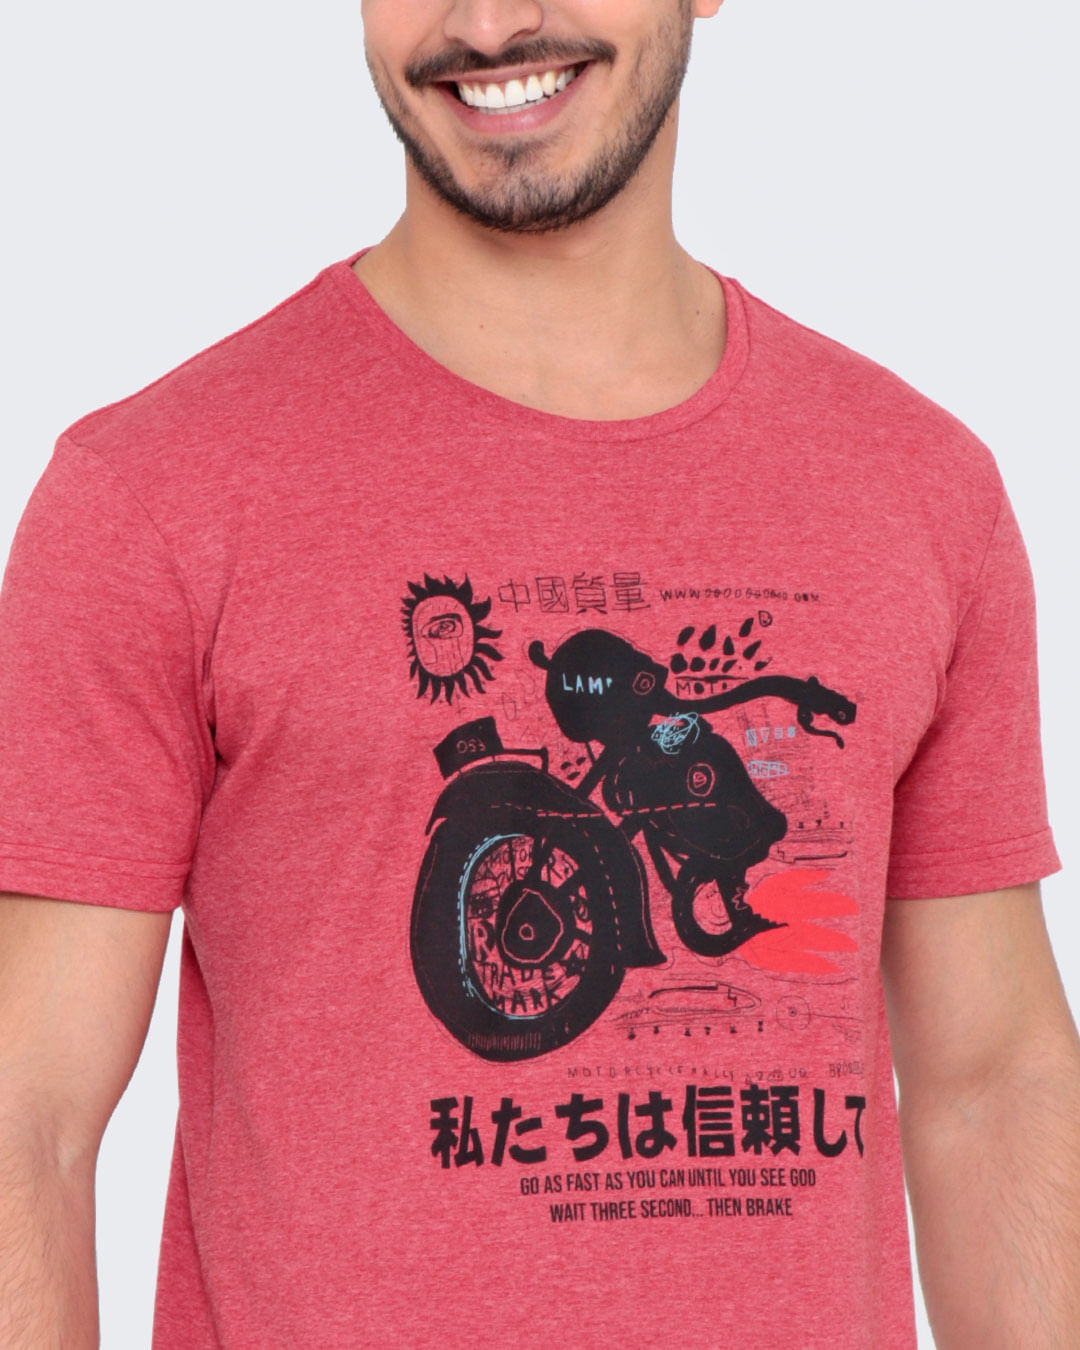 Camiseta-Estampa-Frontal-Manga-Curta-Vermelha